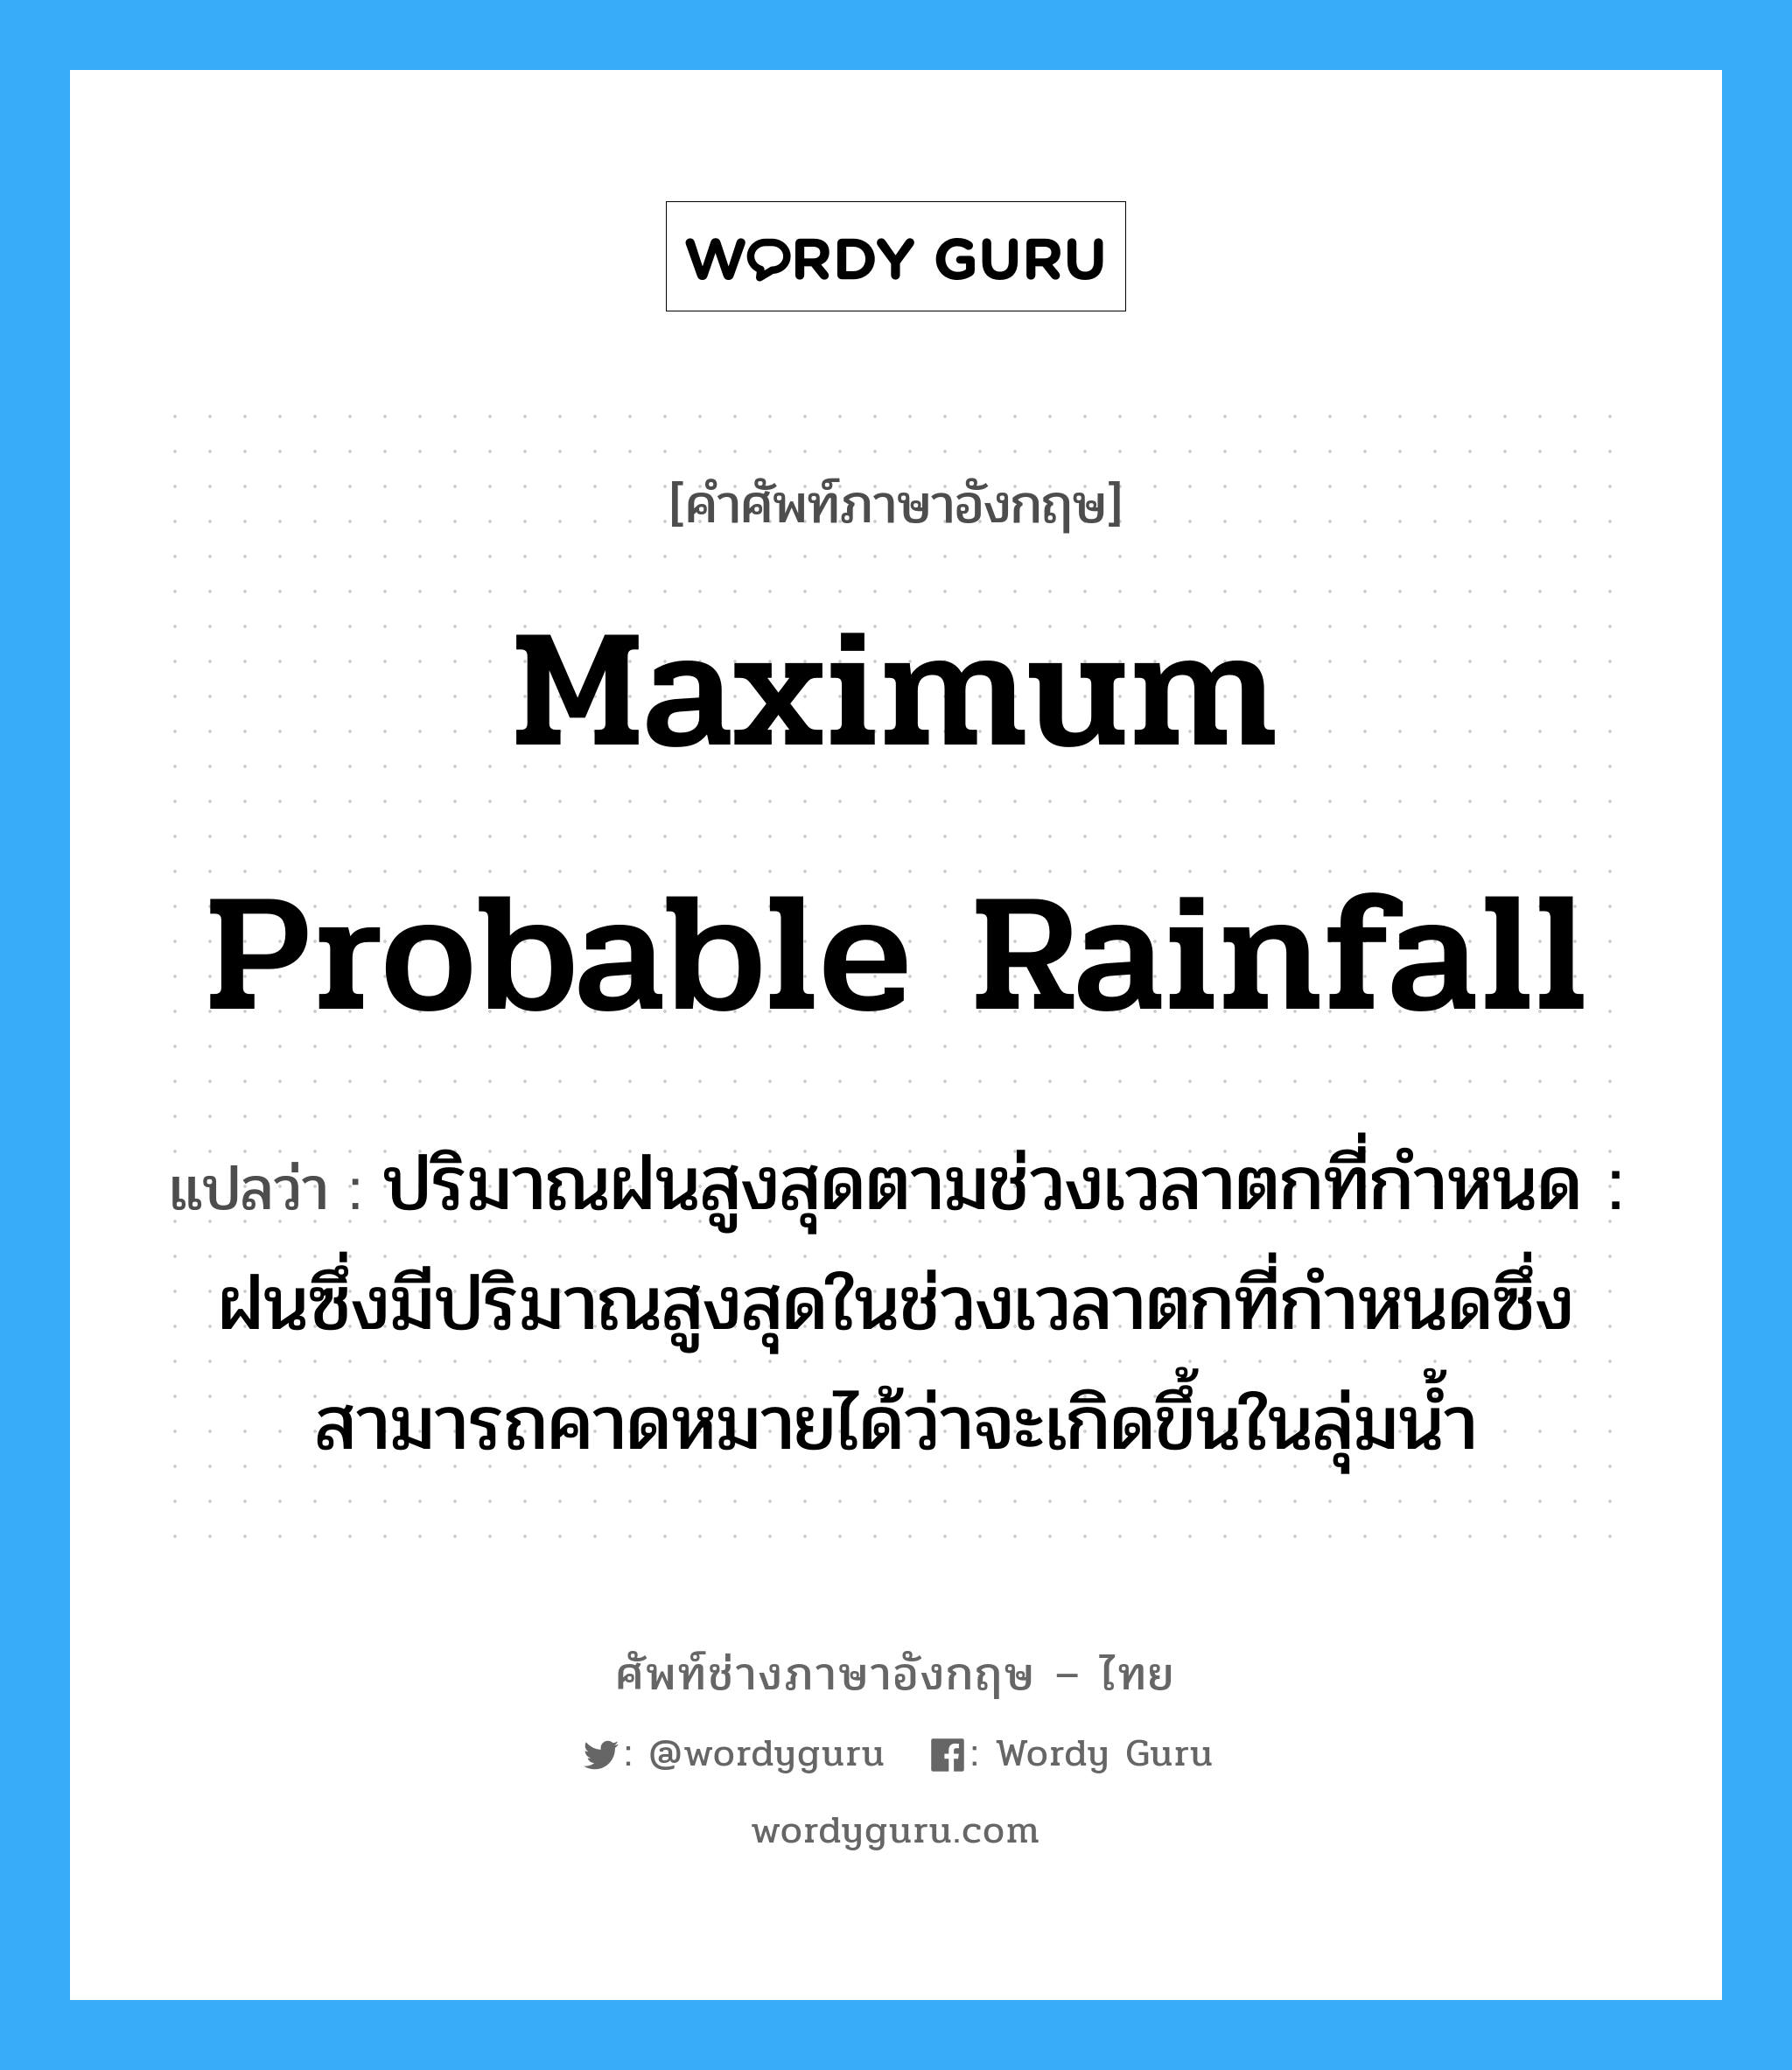 maximum probable rainfall แปลว่า?, คำศัพท์ช่างภาษาอังกฤษ - ไทย maximum probable rainfall คำศัพท์ภาษาอังกฤษ maximum probable rainfall แปลว่า ปริมาณฝนสูงสุดตามช่วงเวลาตกที่กำหนด : ฝนซึ่งมีปริมาณสูงสุดในช่วงเวลาตกที่กำหนดซึ่งสามารถคาดหมายได้ว่าจะเกิดขึ้นในลุ่มน้ำ